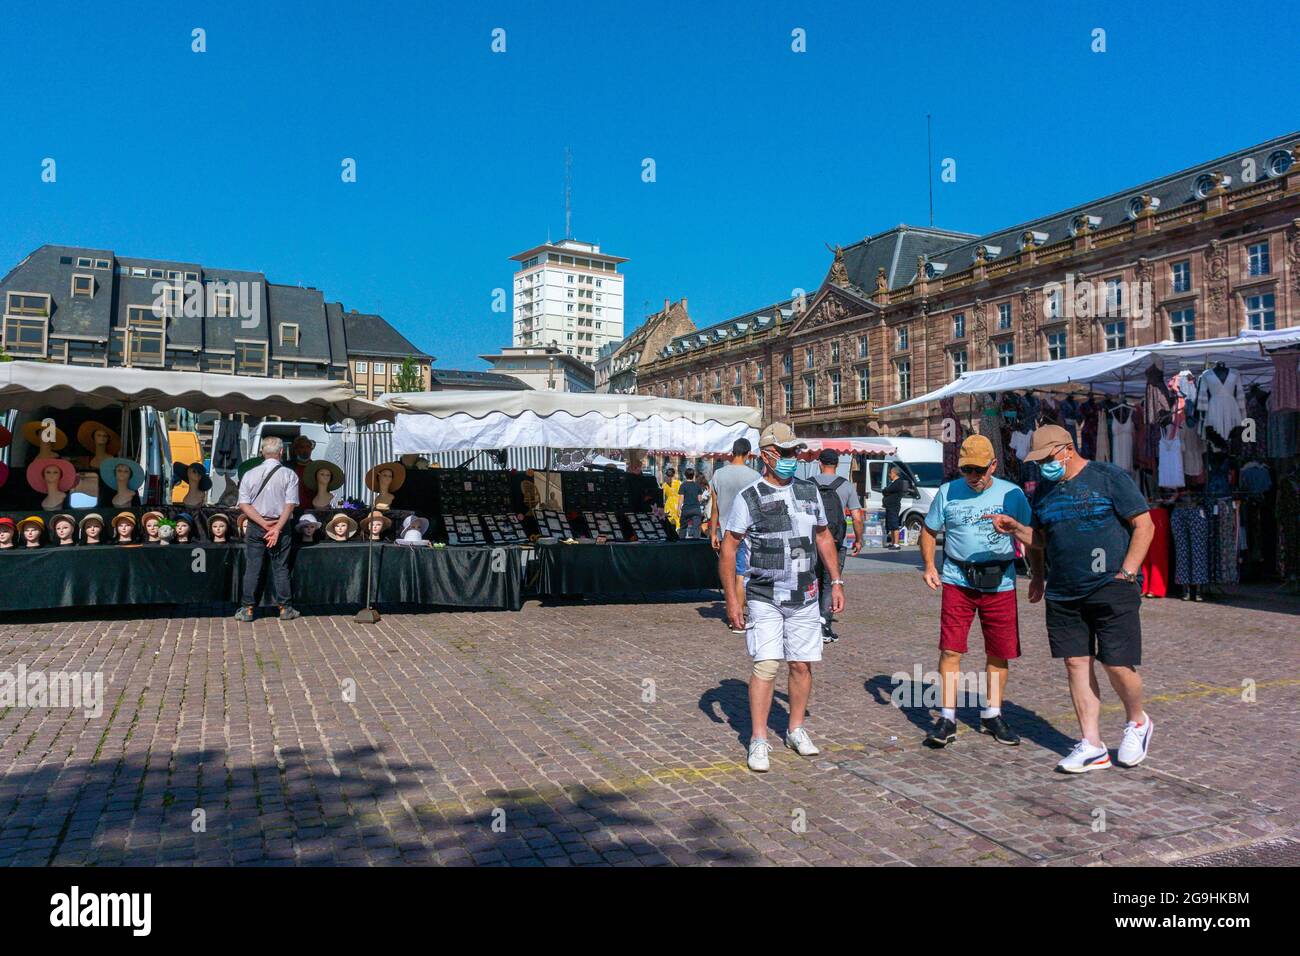 Strasbourg, France, Small Group People, Men, Walking, Talking, Street Scenes, Old City, Historic French Neighborhood, france market people Stock Photo